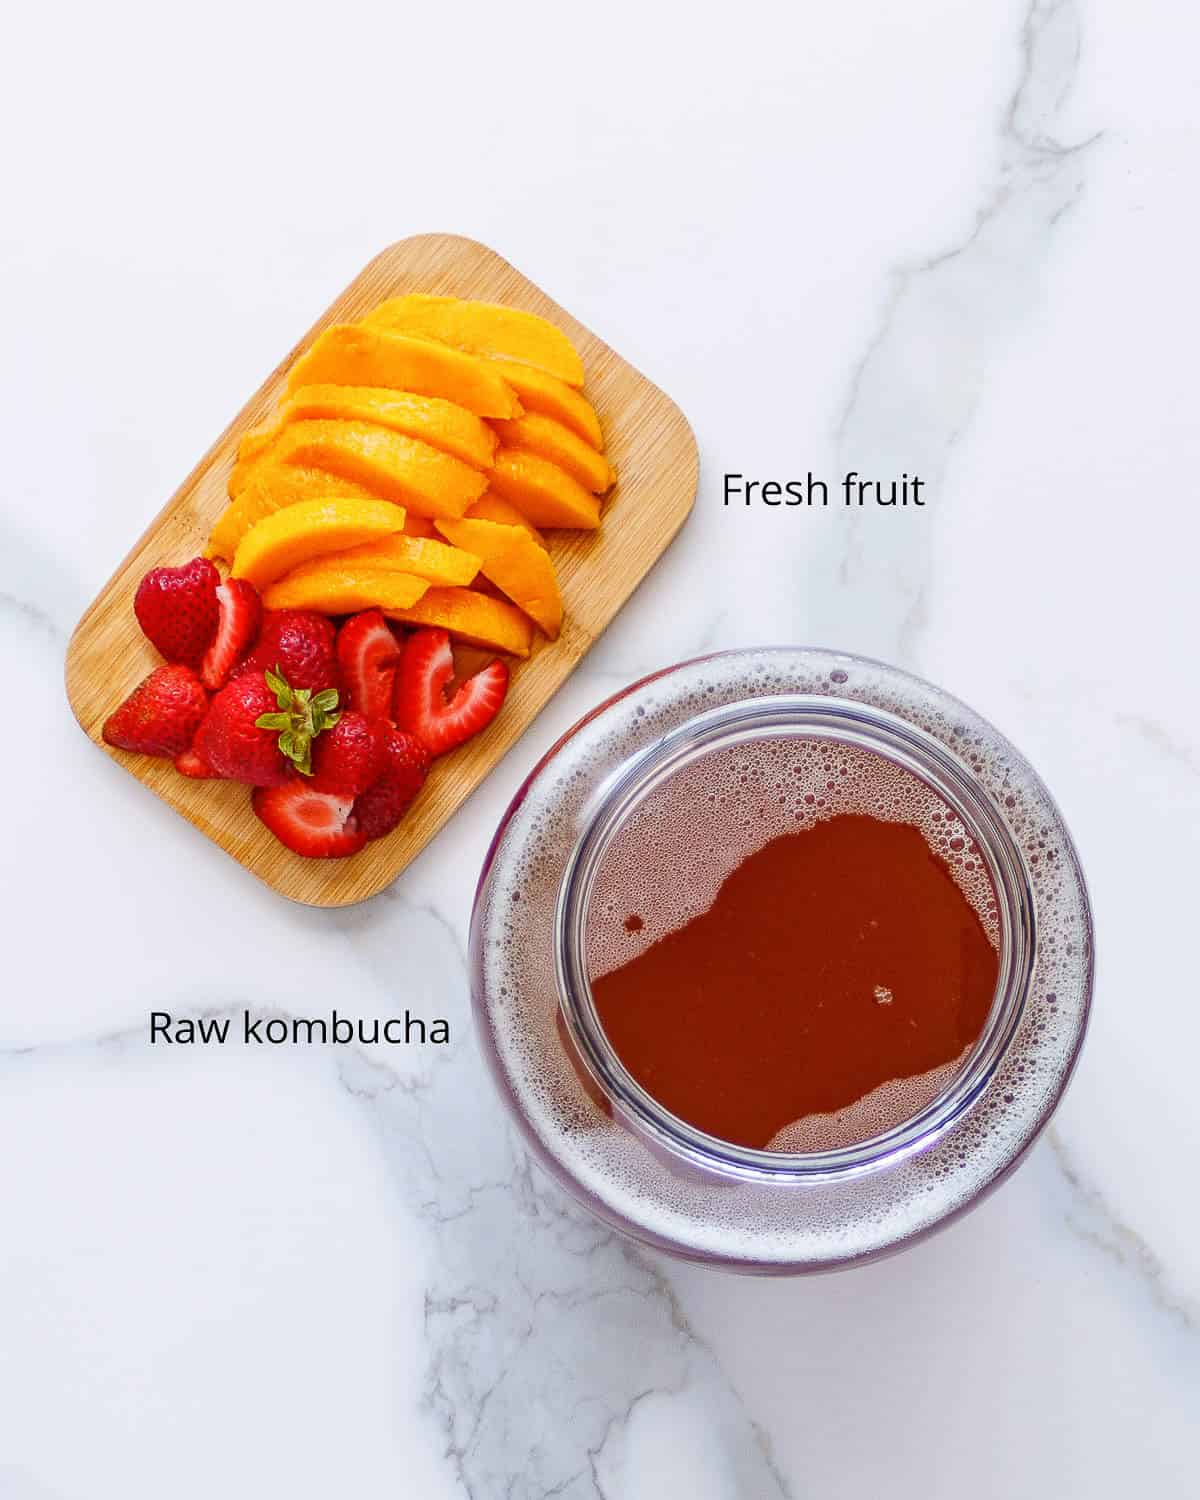 Mango, strawberries and a gallon of kombucha.